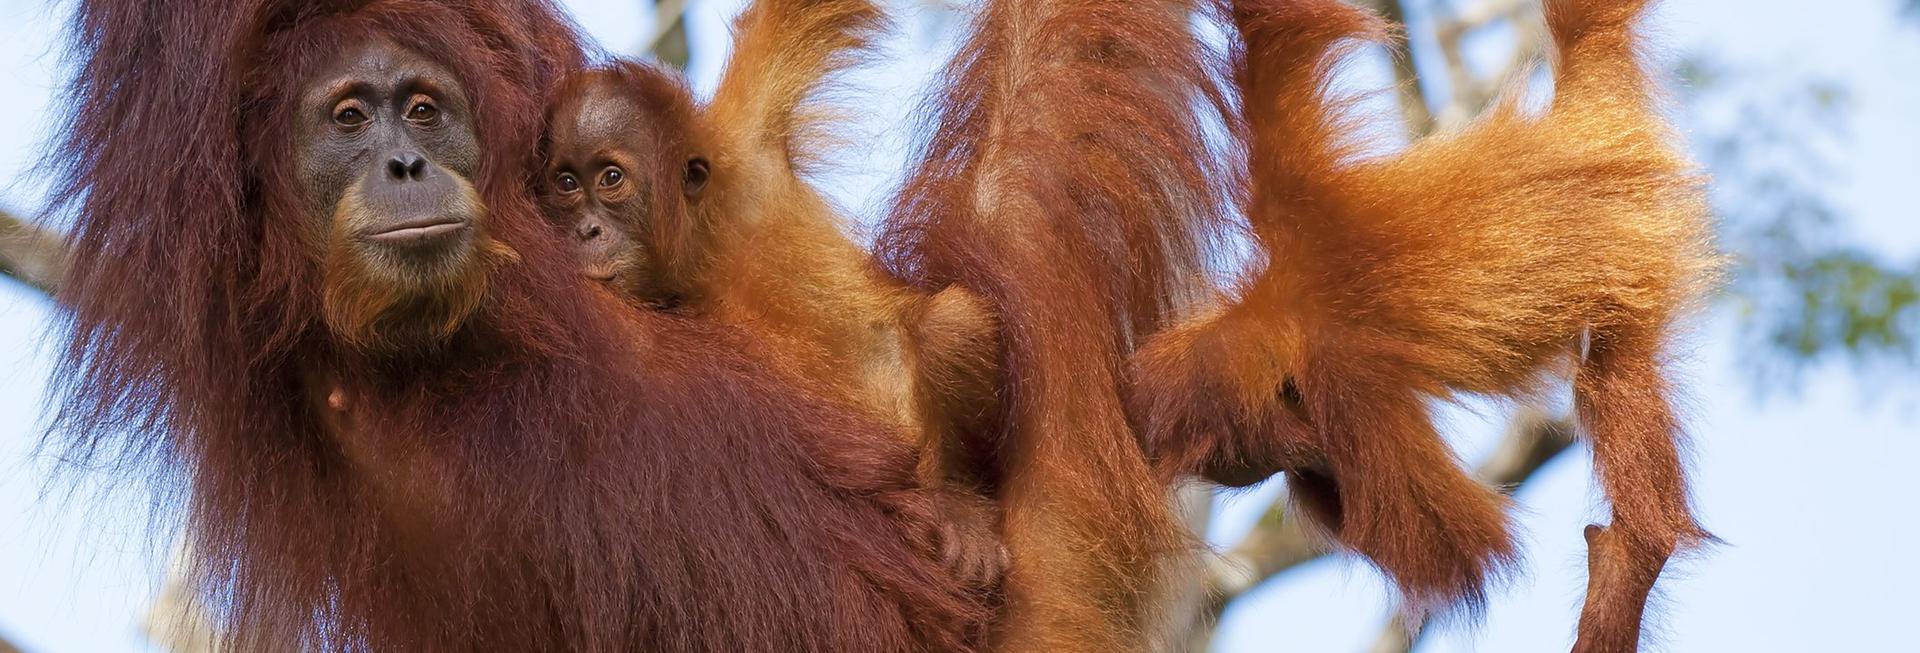 Orangutans, Semonggoh Orangutan Centre